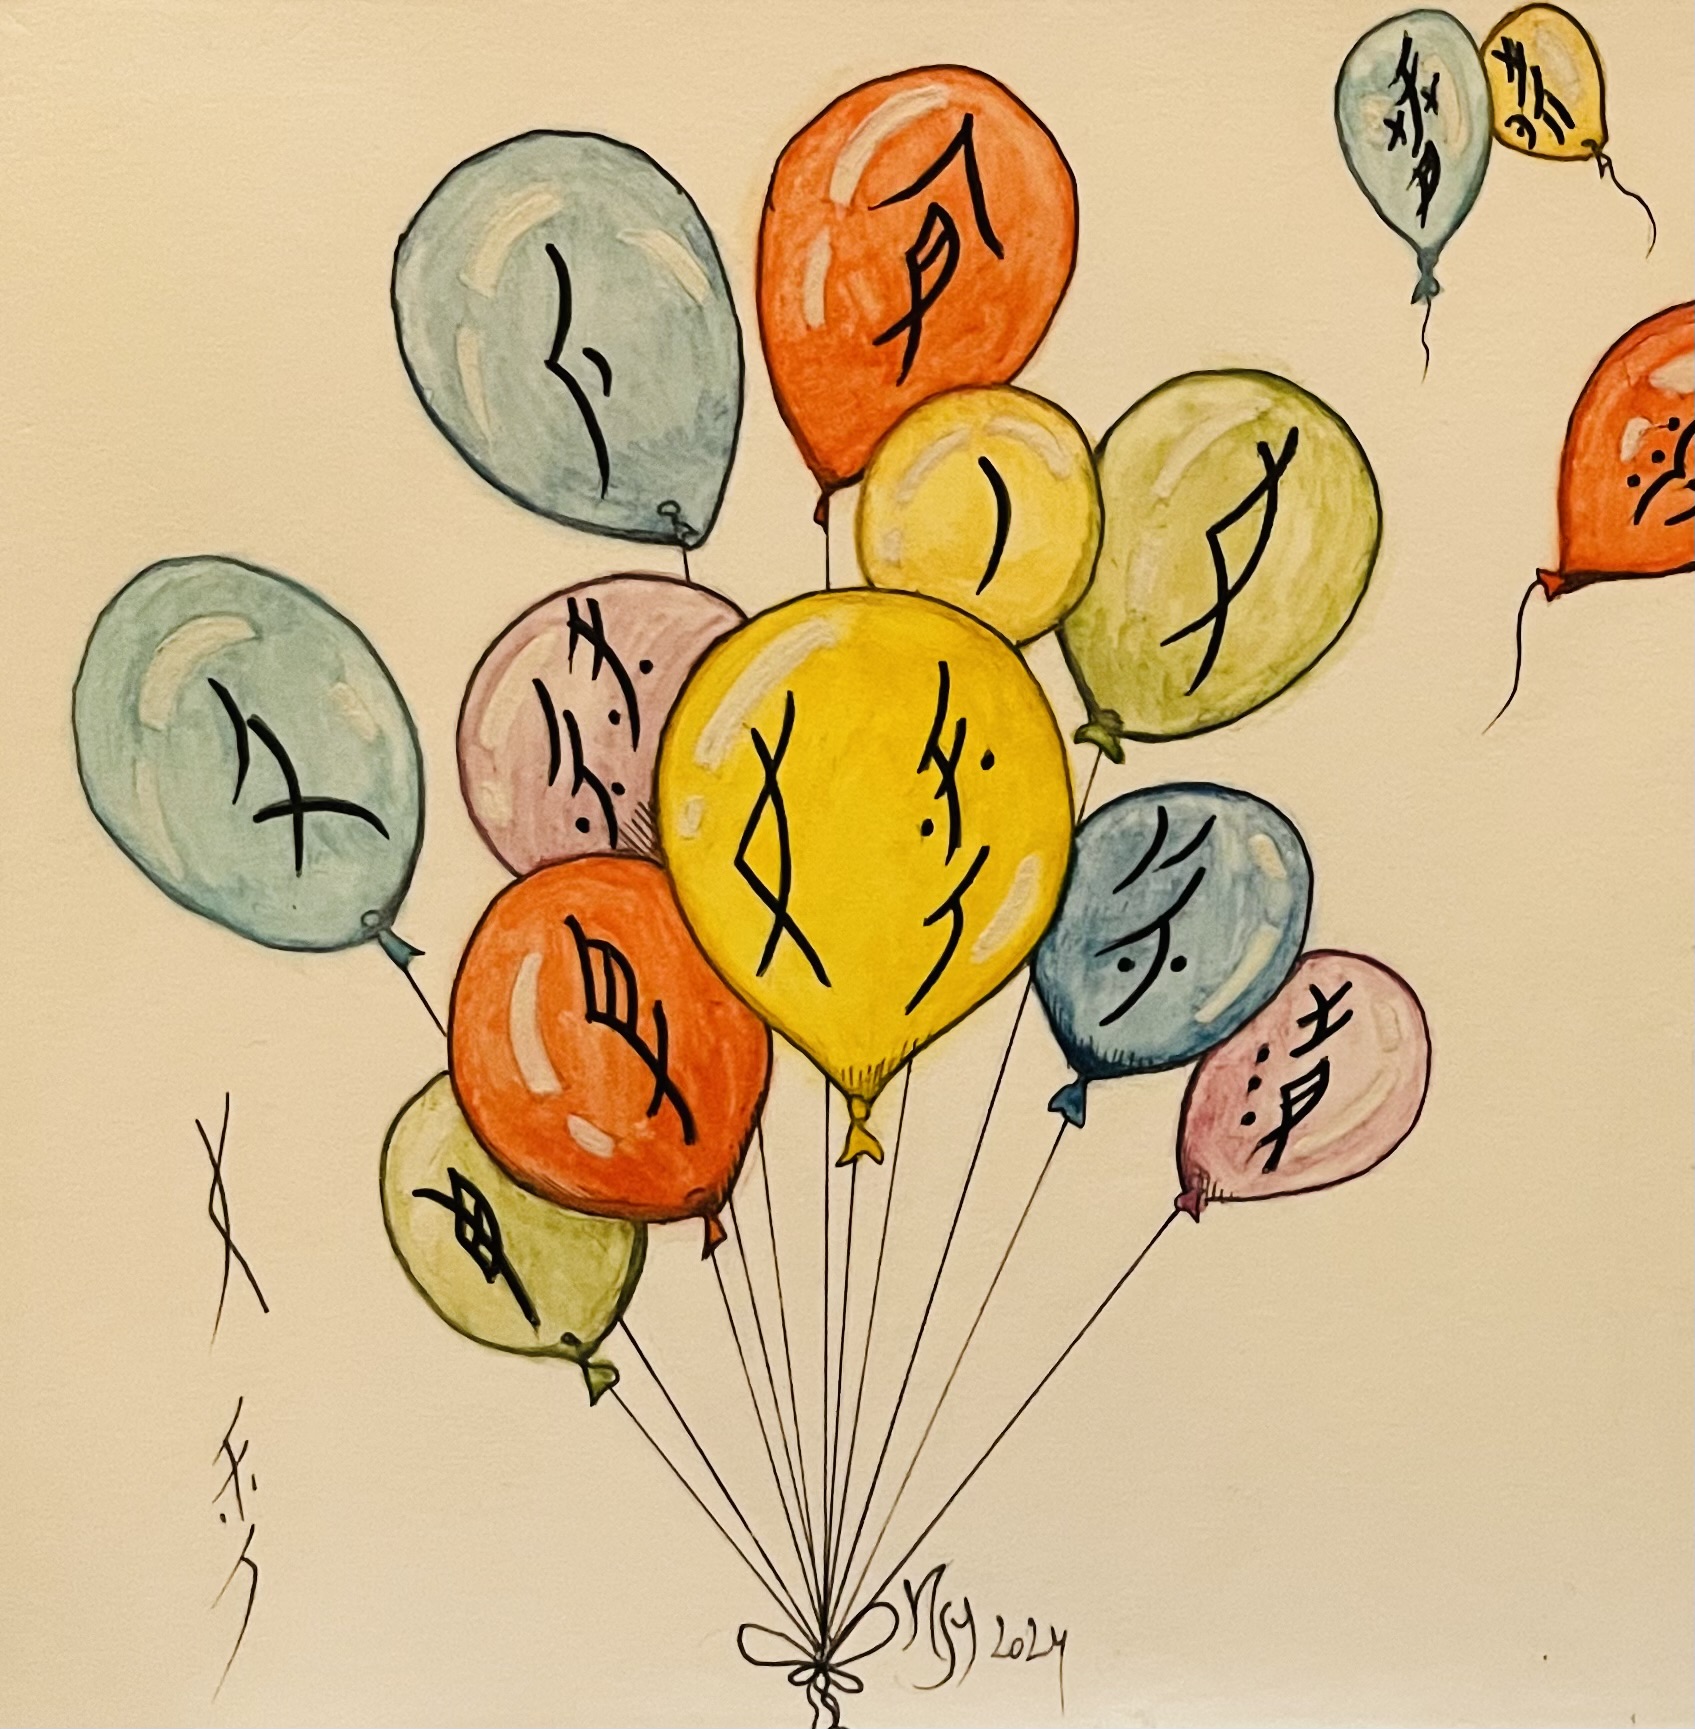 mail-art-ballons-nushu